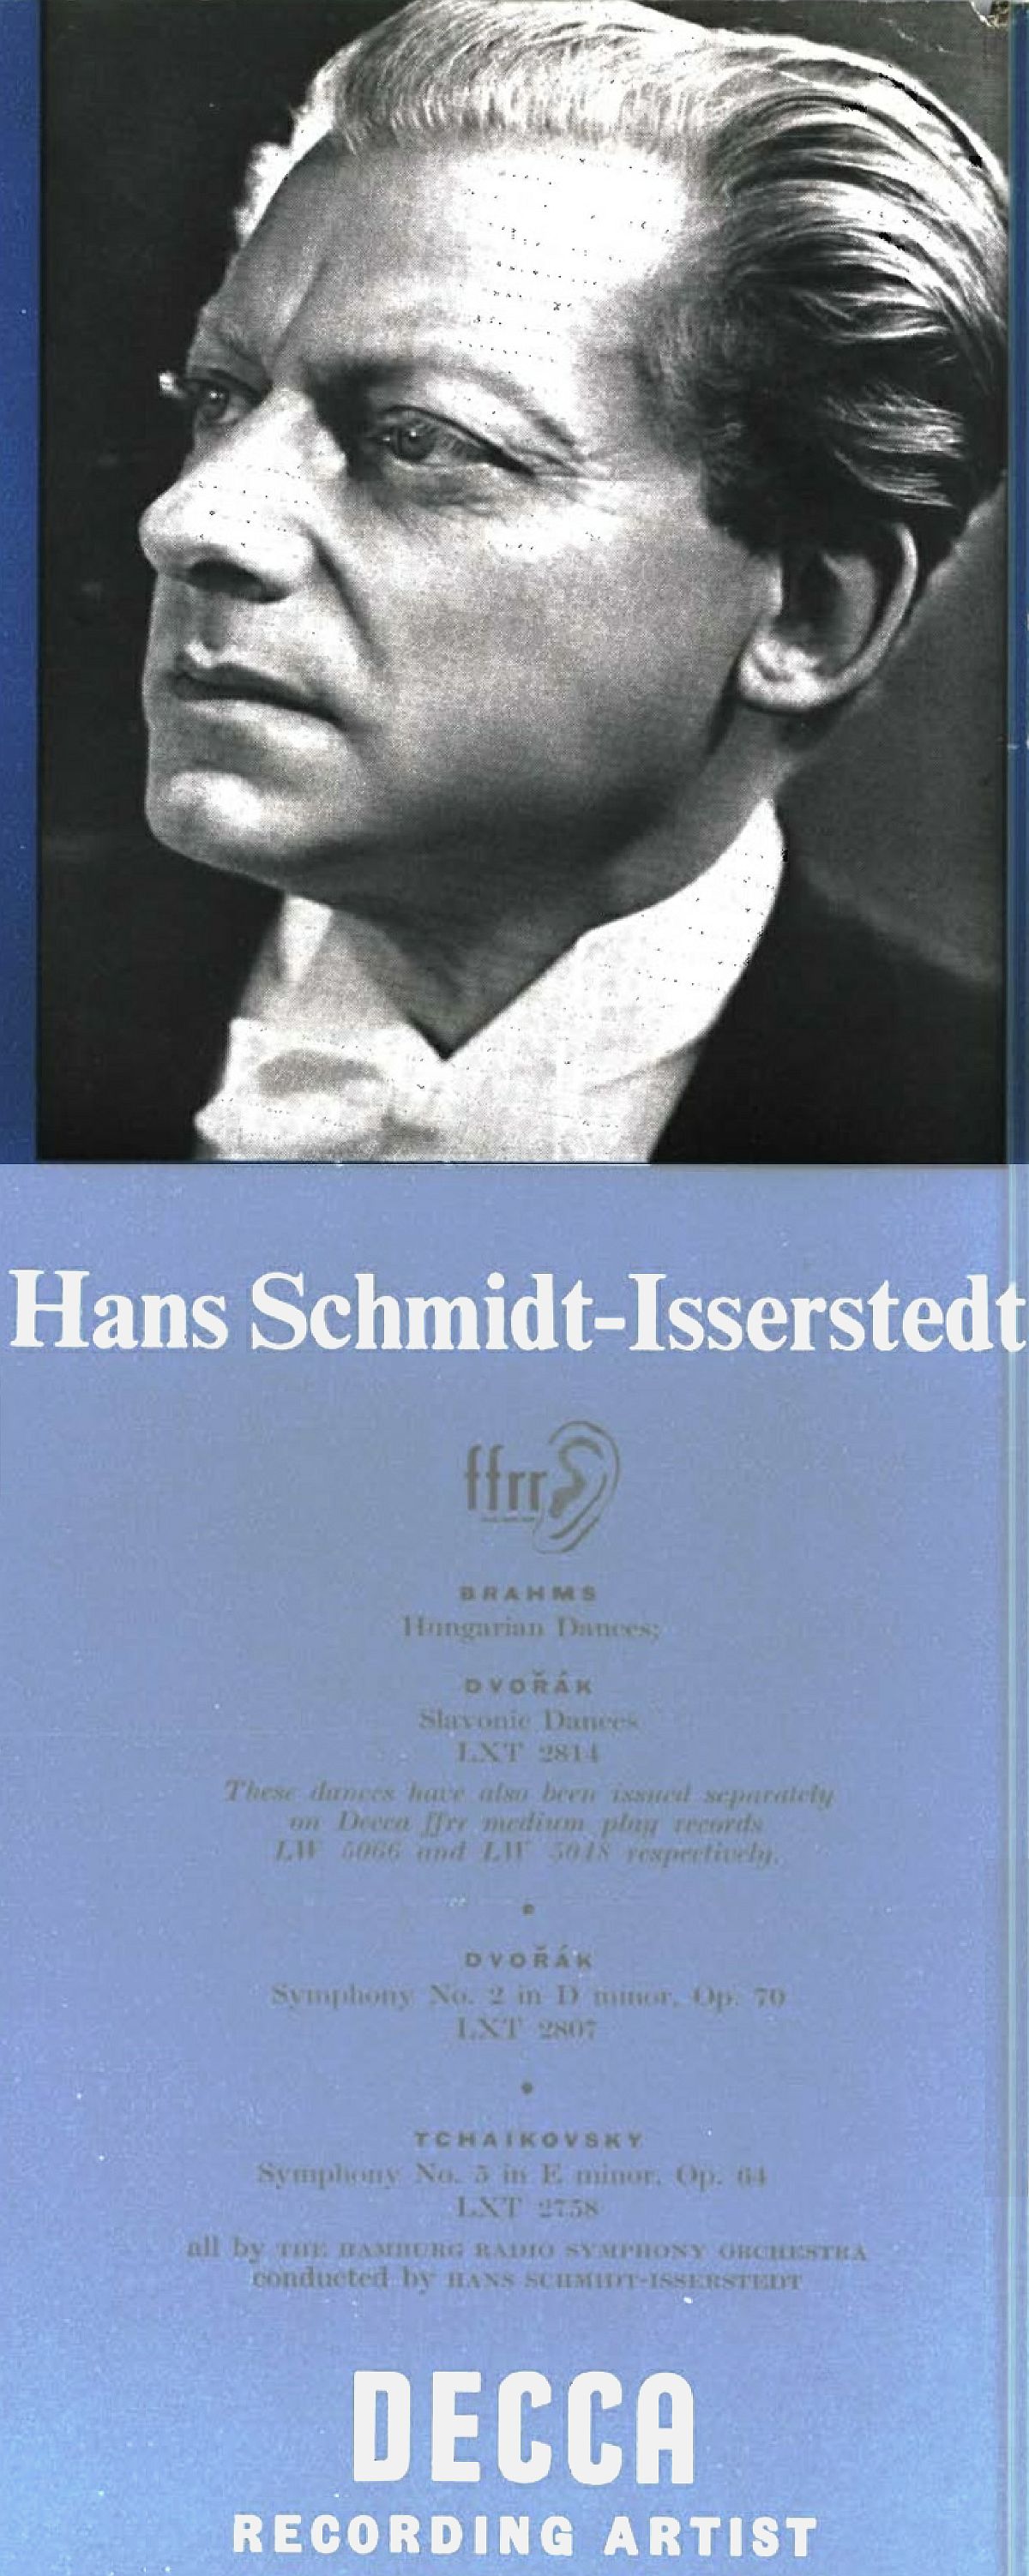 SchmidtIsserstedt Hans Dvorak Brahms The Gramophone 02 1954